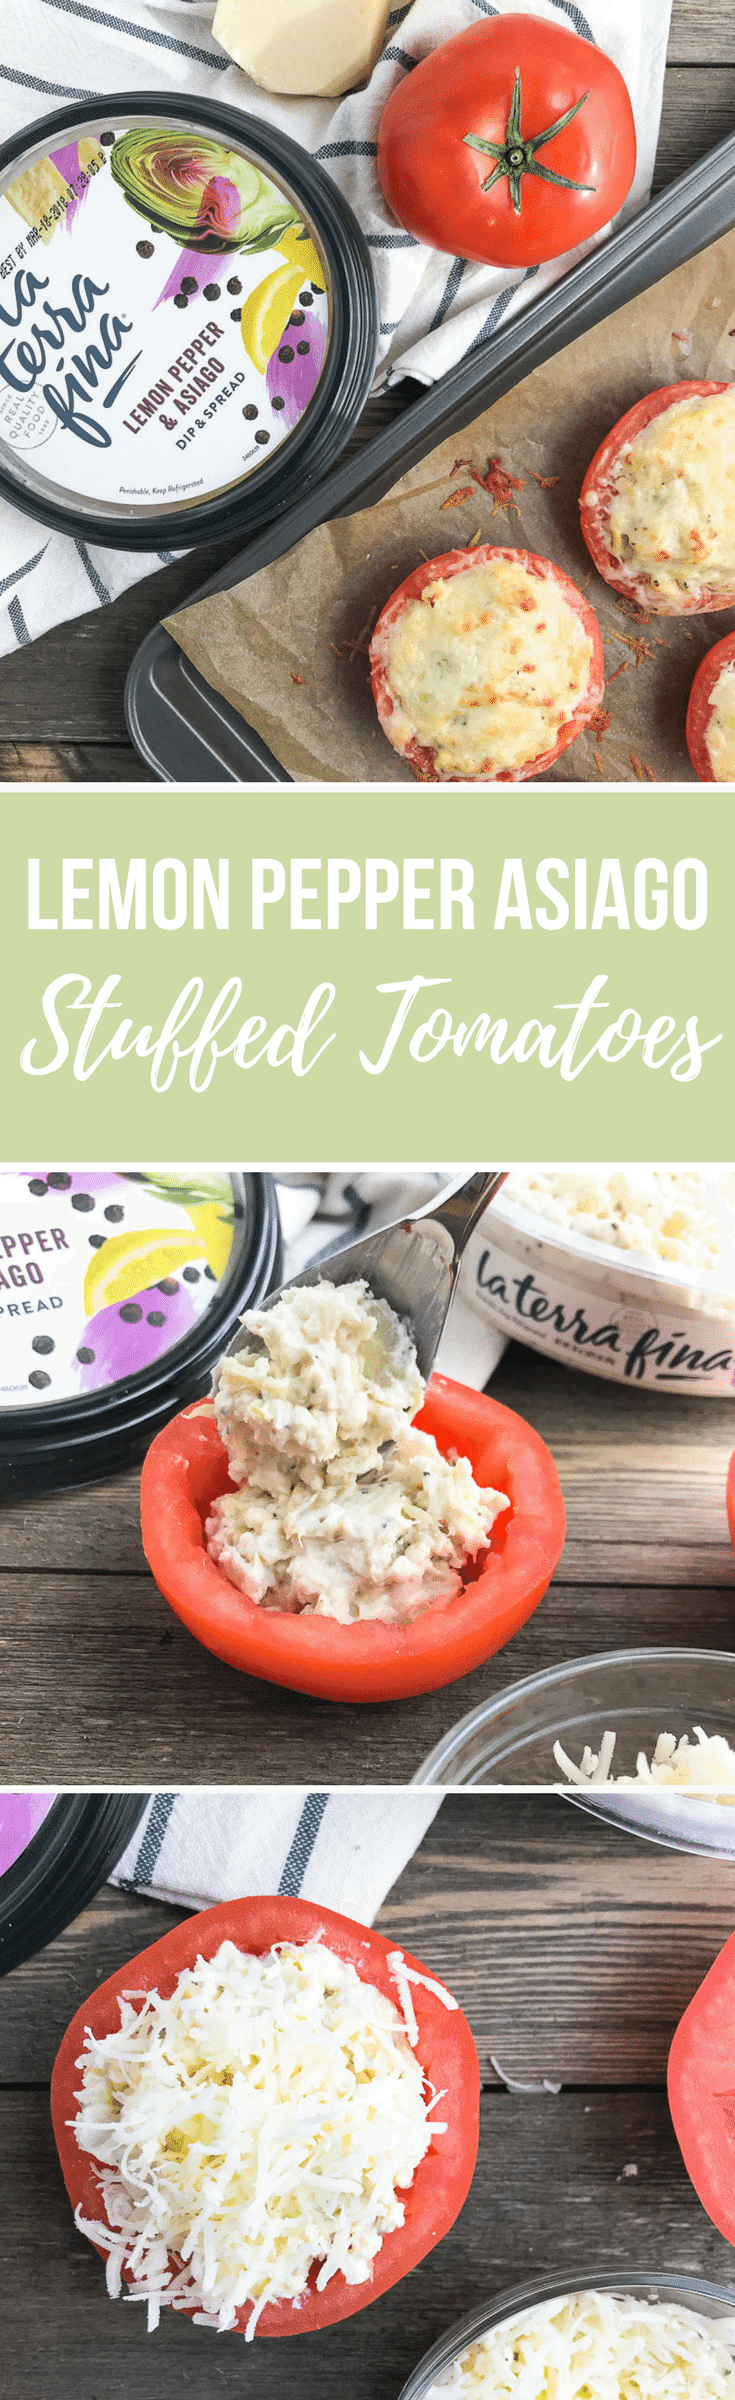 Lemon Pepper Asiago Stuffed Tomatoes via RDelicious Kitchen @RD_Kitchen #ad #superbowl #gameday #biggame #appetizers #tomatoes #dip #greekyogurt